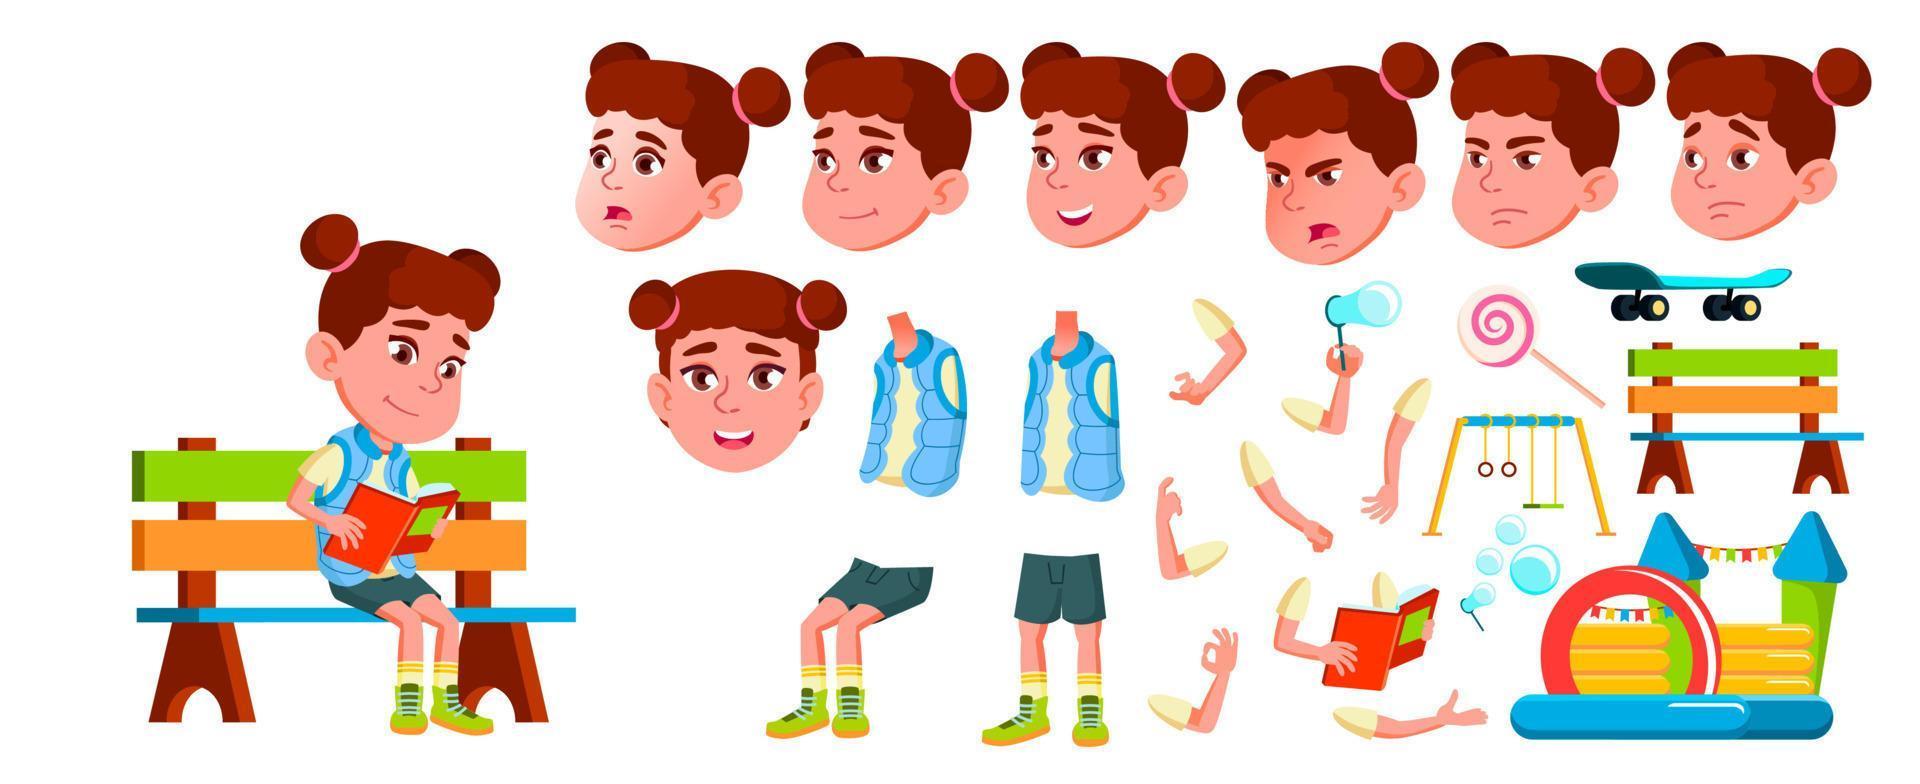 Girl Kindergarten Kid Vector. Animation Creation Set. Face Emotions, Gestures. Friendly Little Children. Cute, Comic. For Presentation, Print Invitation Design. Animated. Isolated Cartoon Illustration vector